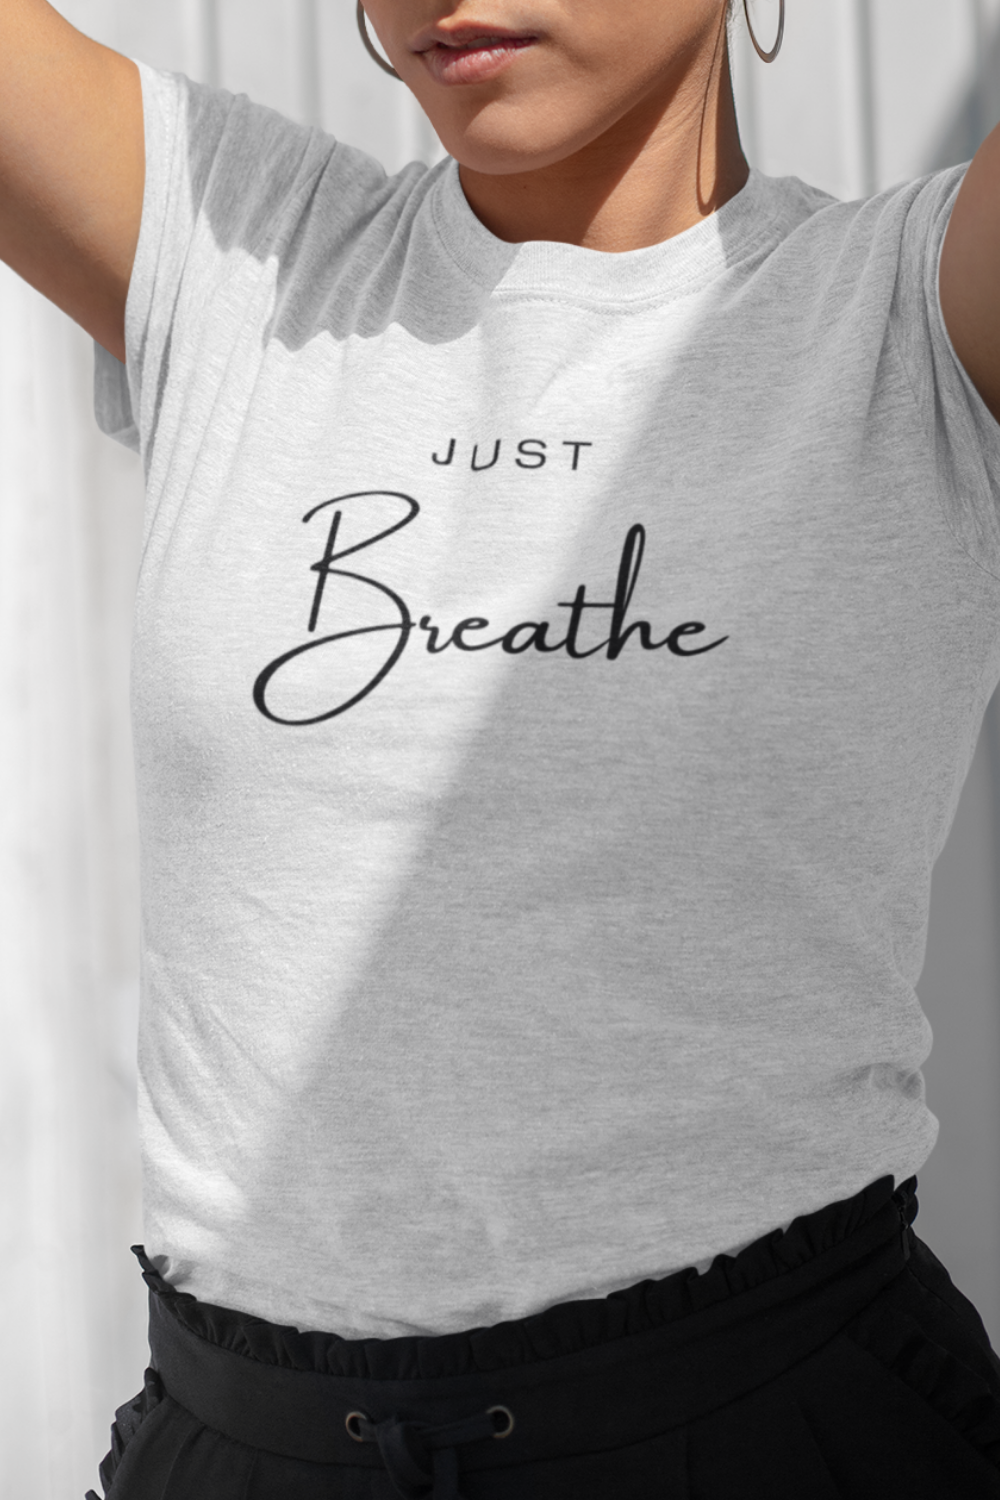 Just Breathe Women's T-Shirt (100% Organic Cotton)